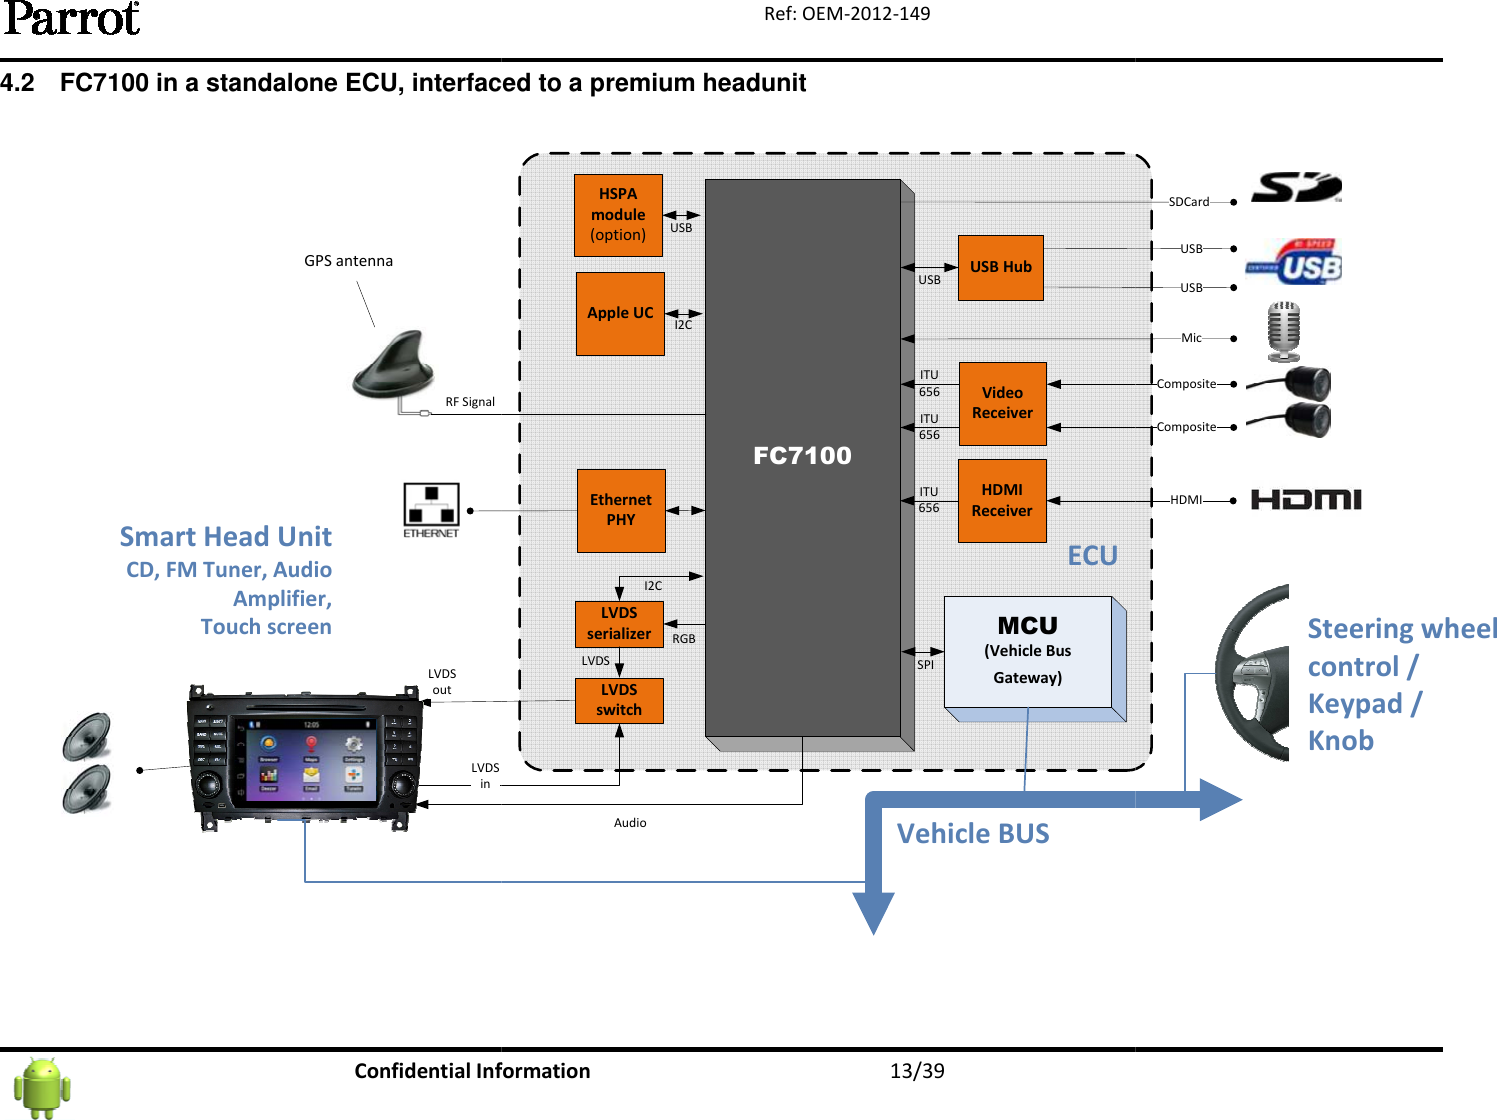   Confidential Information4.2 FC7100 in a standalone ECU, interfaced to a premium headunit LVDSoutLVDSinSmart Head UnitCD, FM Tuner, Audio Amplifier,Touch screenRF SignalGPS antennaInformation  13/39 Ref: OEM-2012-149 FC7100 in a standalone ECU, interfaced to a premium headunit FC7100LVDS switchUSB HubMCU(Vehicle Bus Gateway)HSPA module (option)Apple UCAudio Vehicle BUSSPIRGBI2CUSBUSBI2CLVDS serializerLVDSHDMI ReceiverITU 656Video ReceiverITU 656ITU 656Ethernet PHYECU   MicSDCardUSBUSBHDMICompositeCompositeSteering wheel control /Keypad /Knob